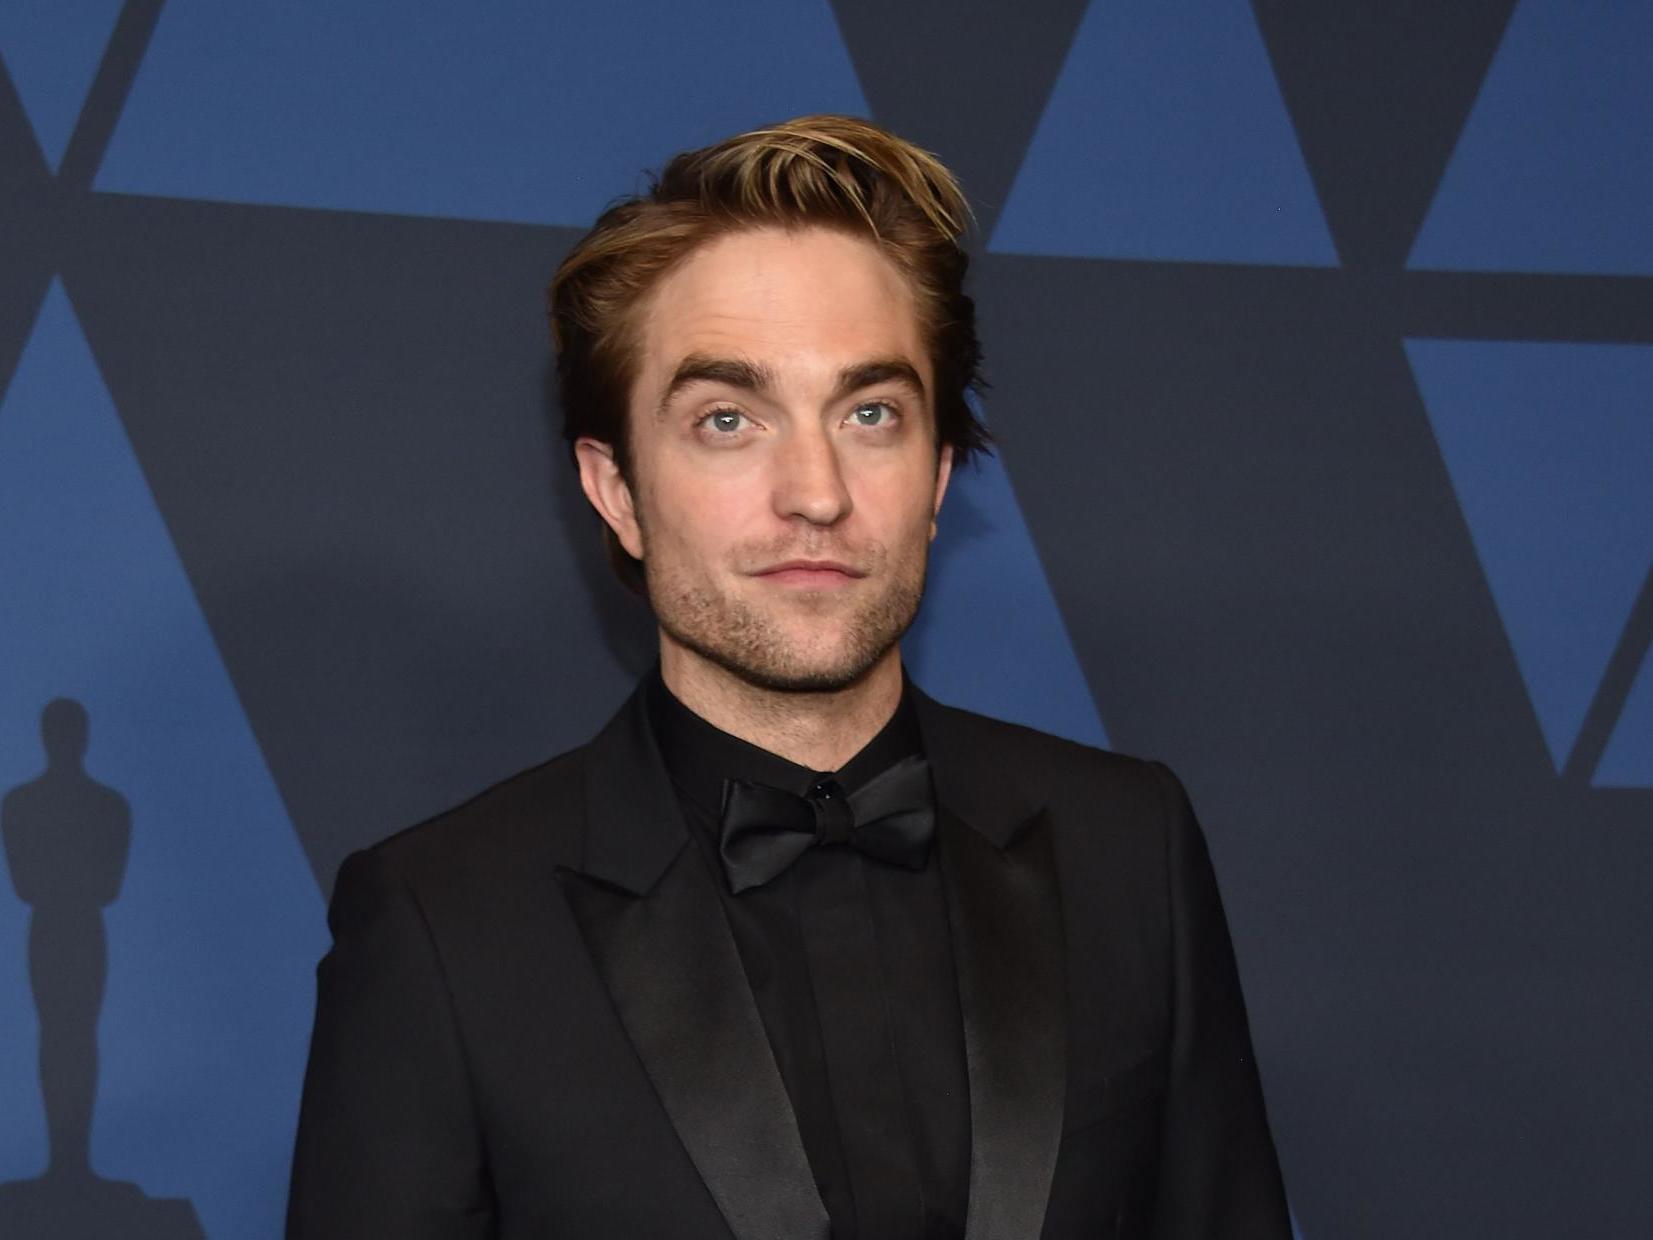 Twilight - Robert Pattinson by noeling on DeviantArt